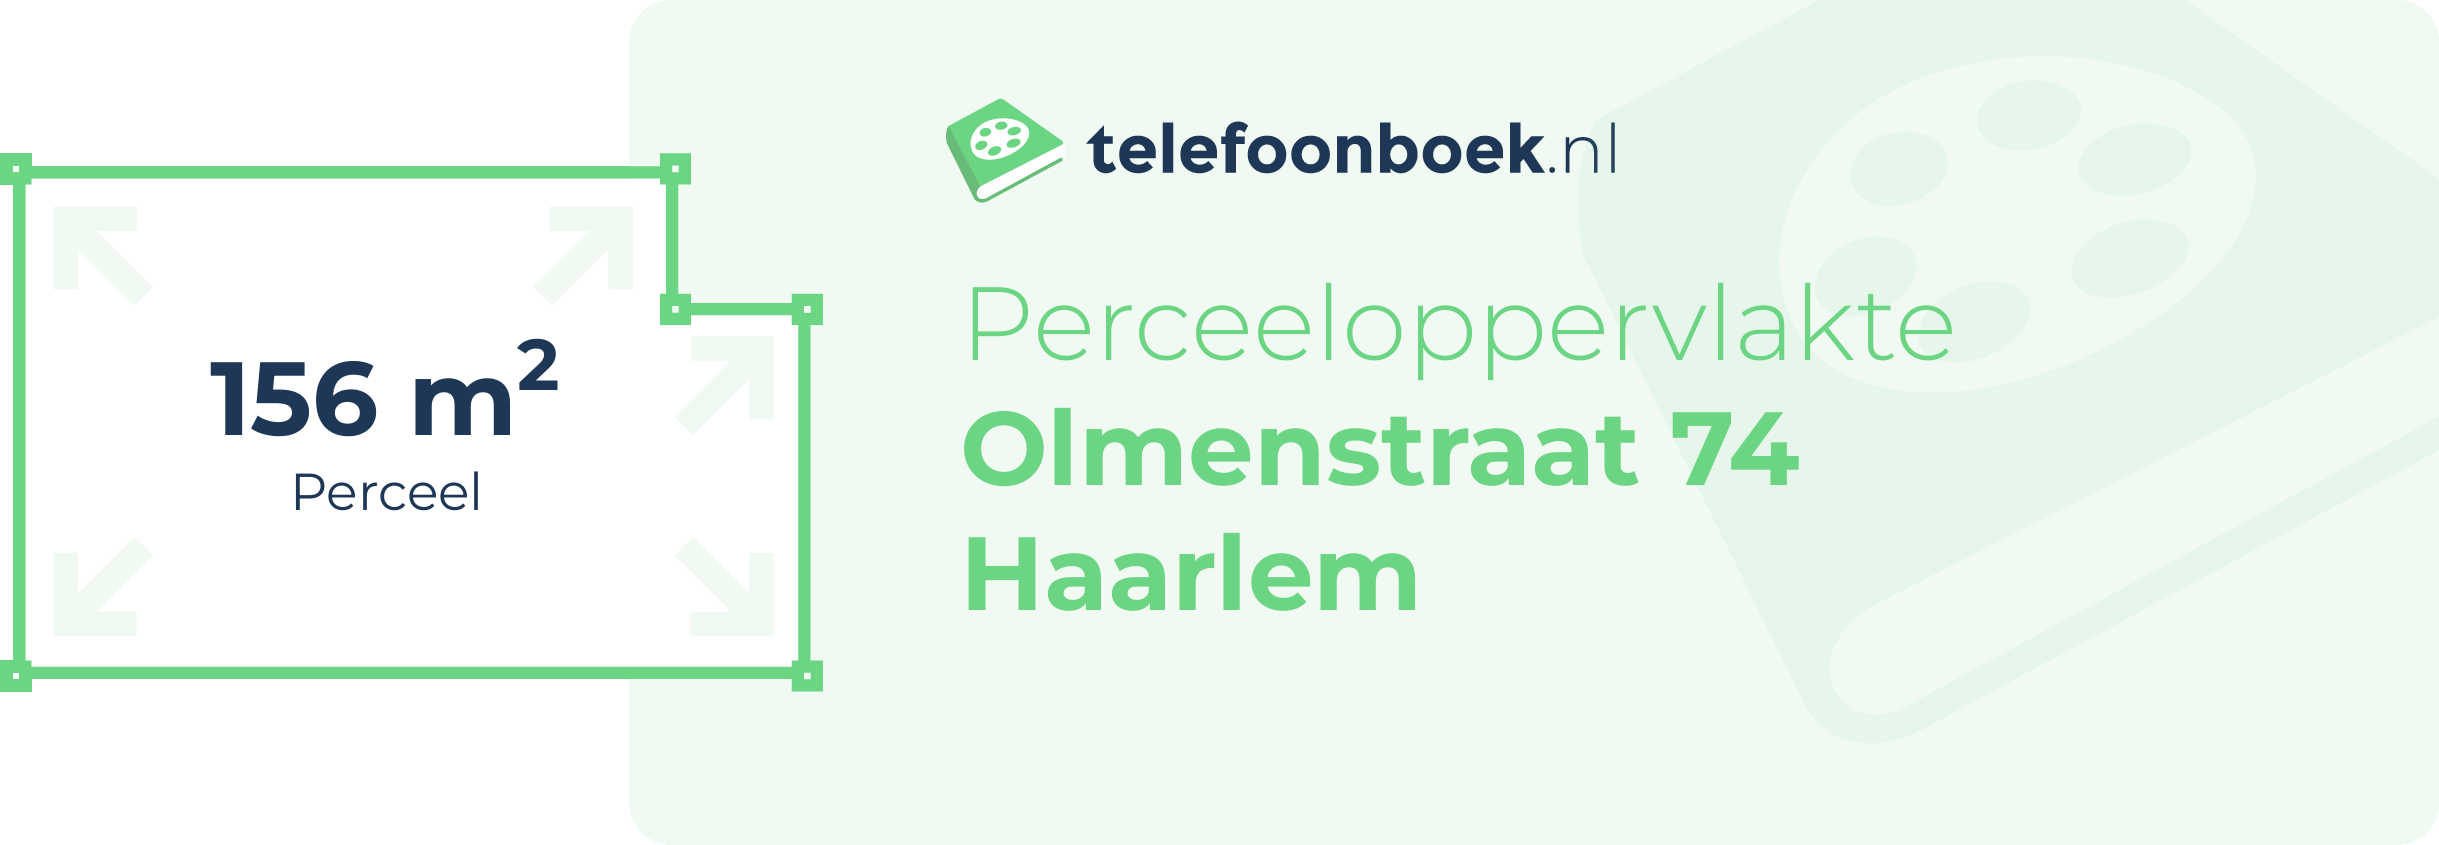 Perceeloppervlakte Olmenstraat 74 Haarlem